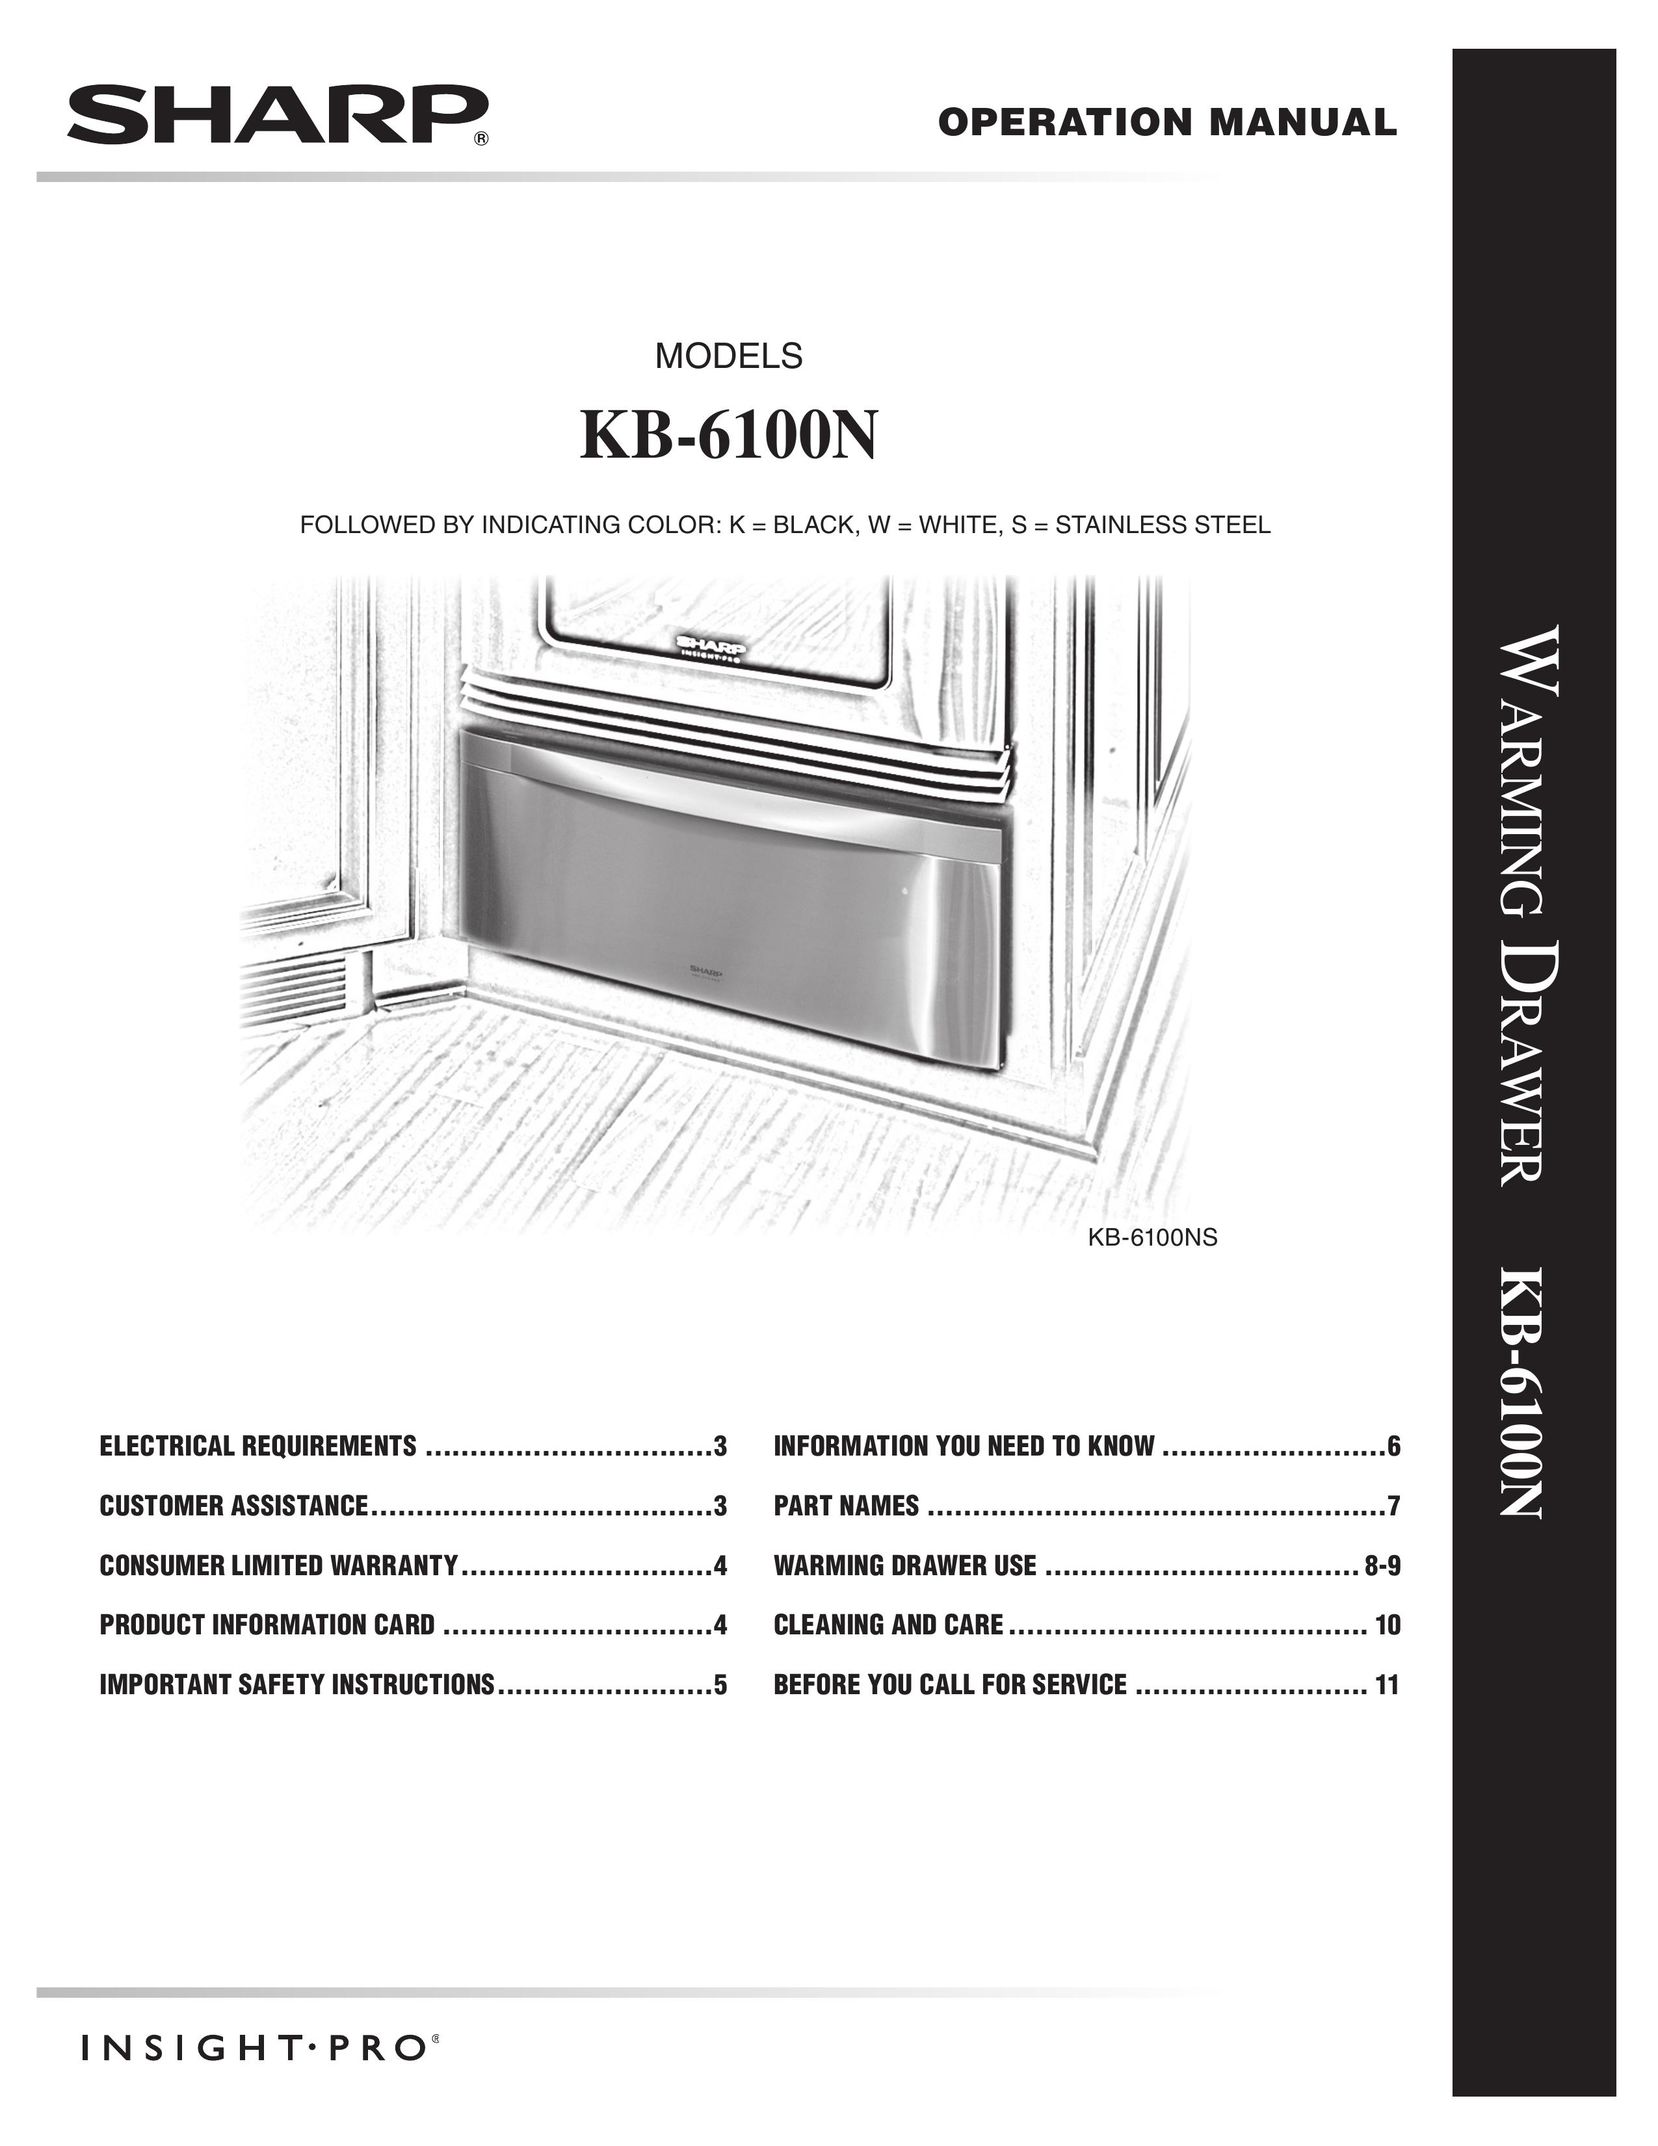 Sharp KB-6100N Food Warmer User Manual